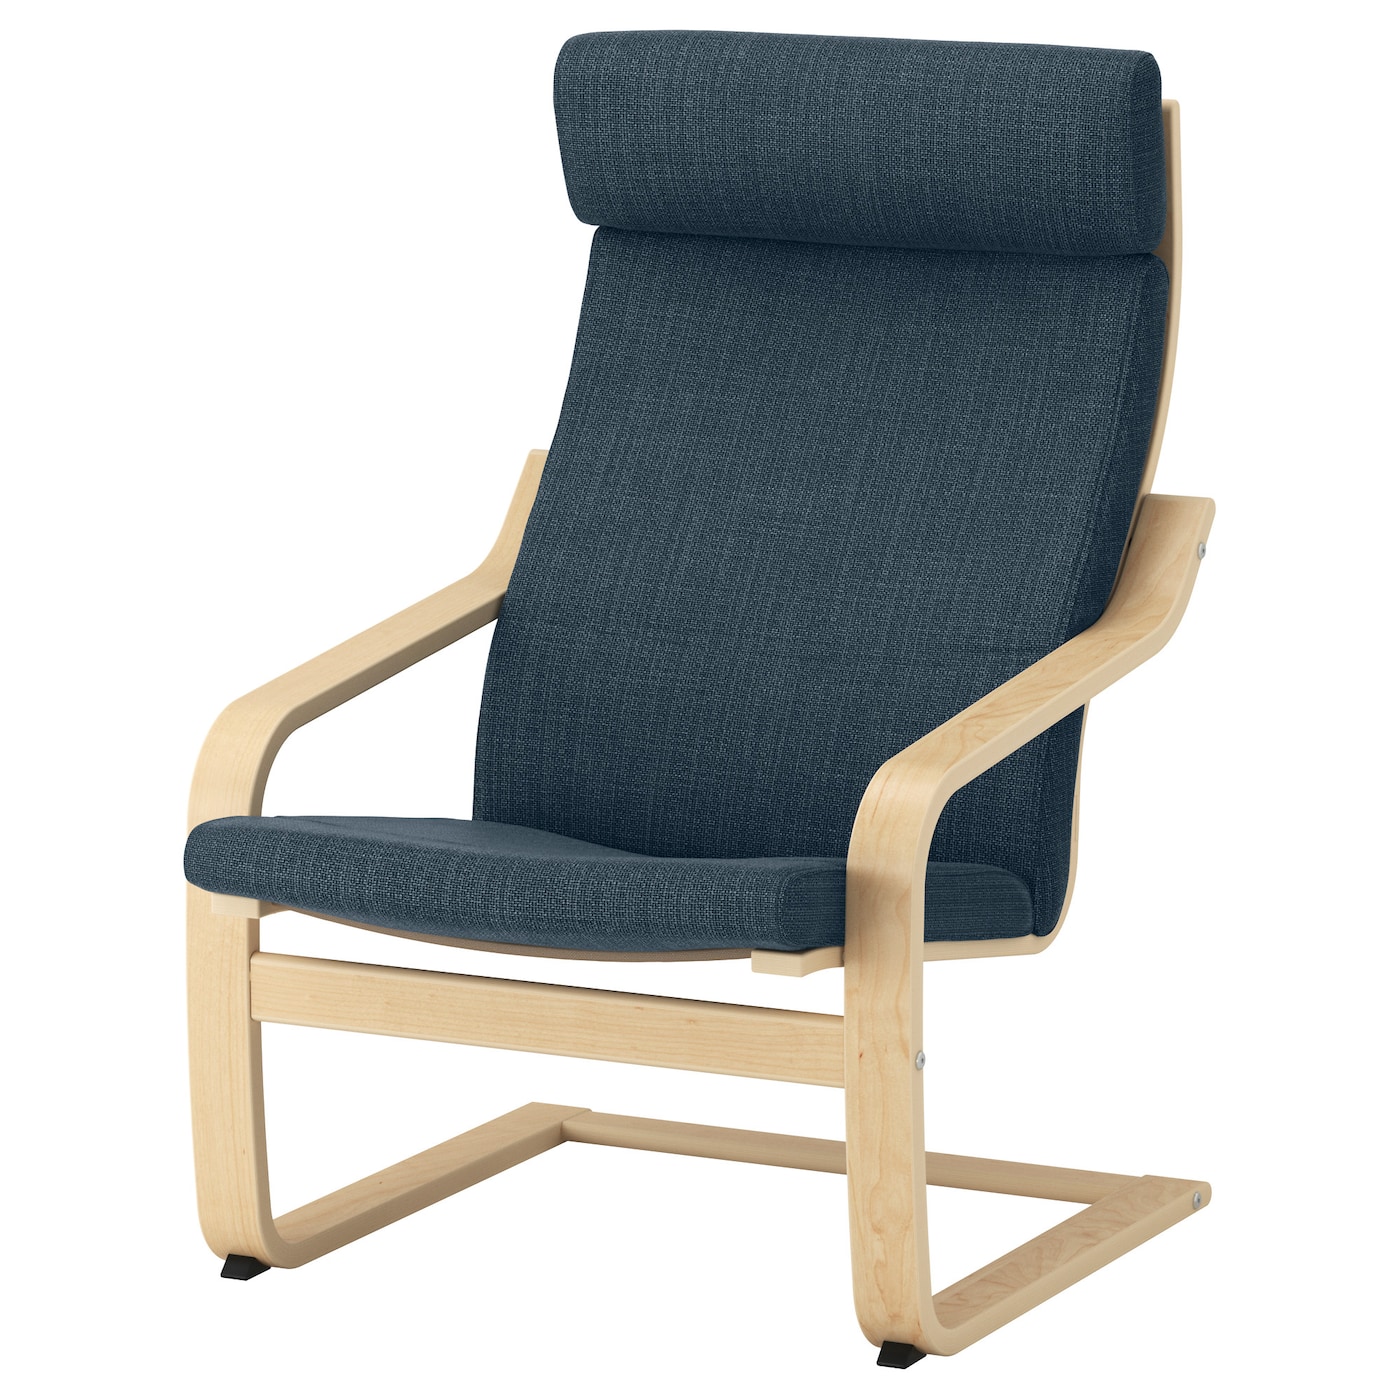 ПОЭНГ Кресло, березовый шпон/Хилларед темно-синий POÄNG IKEA кресло рон синий